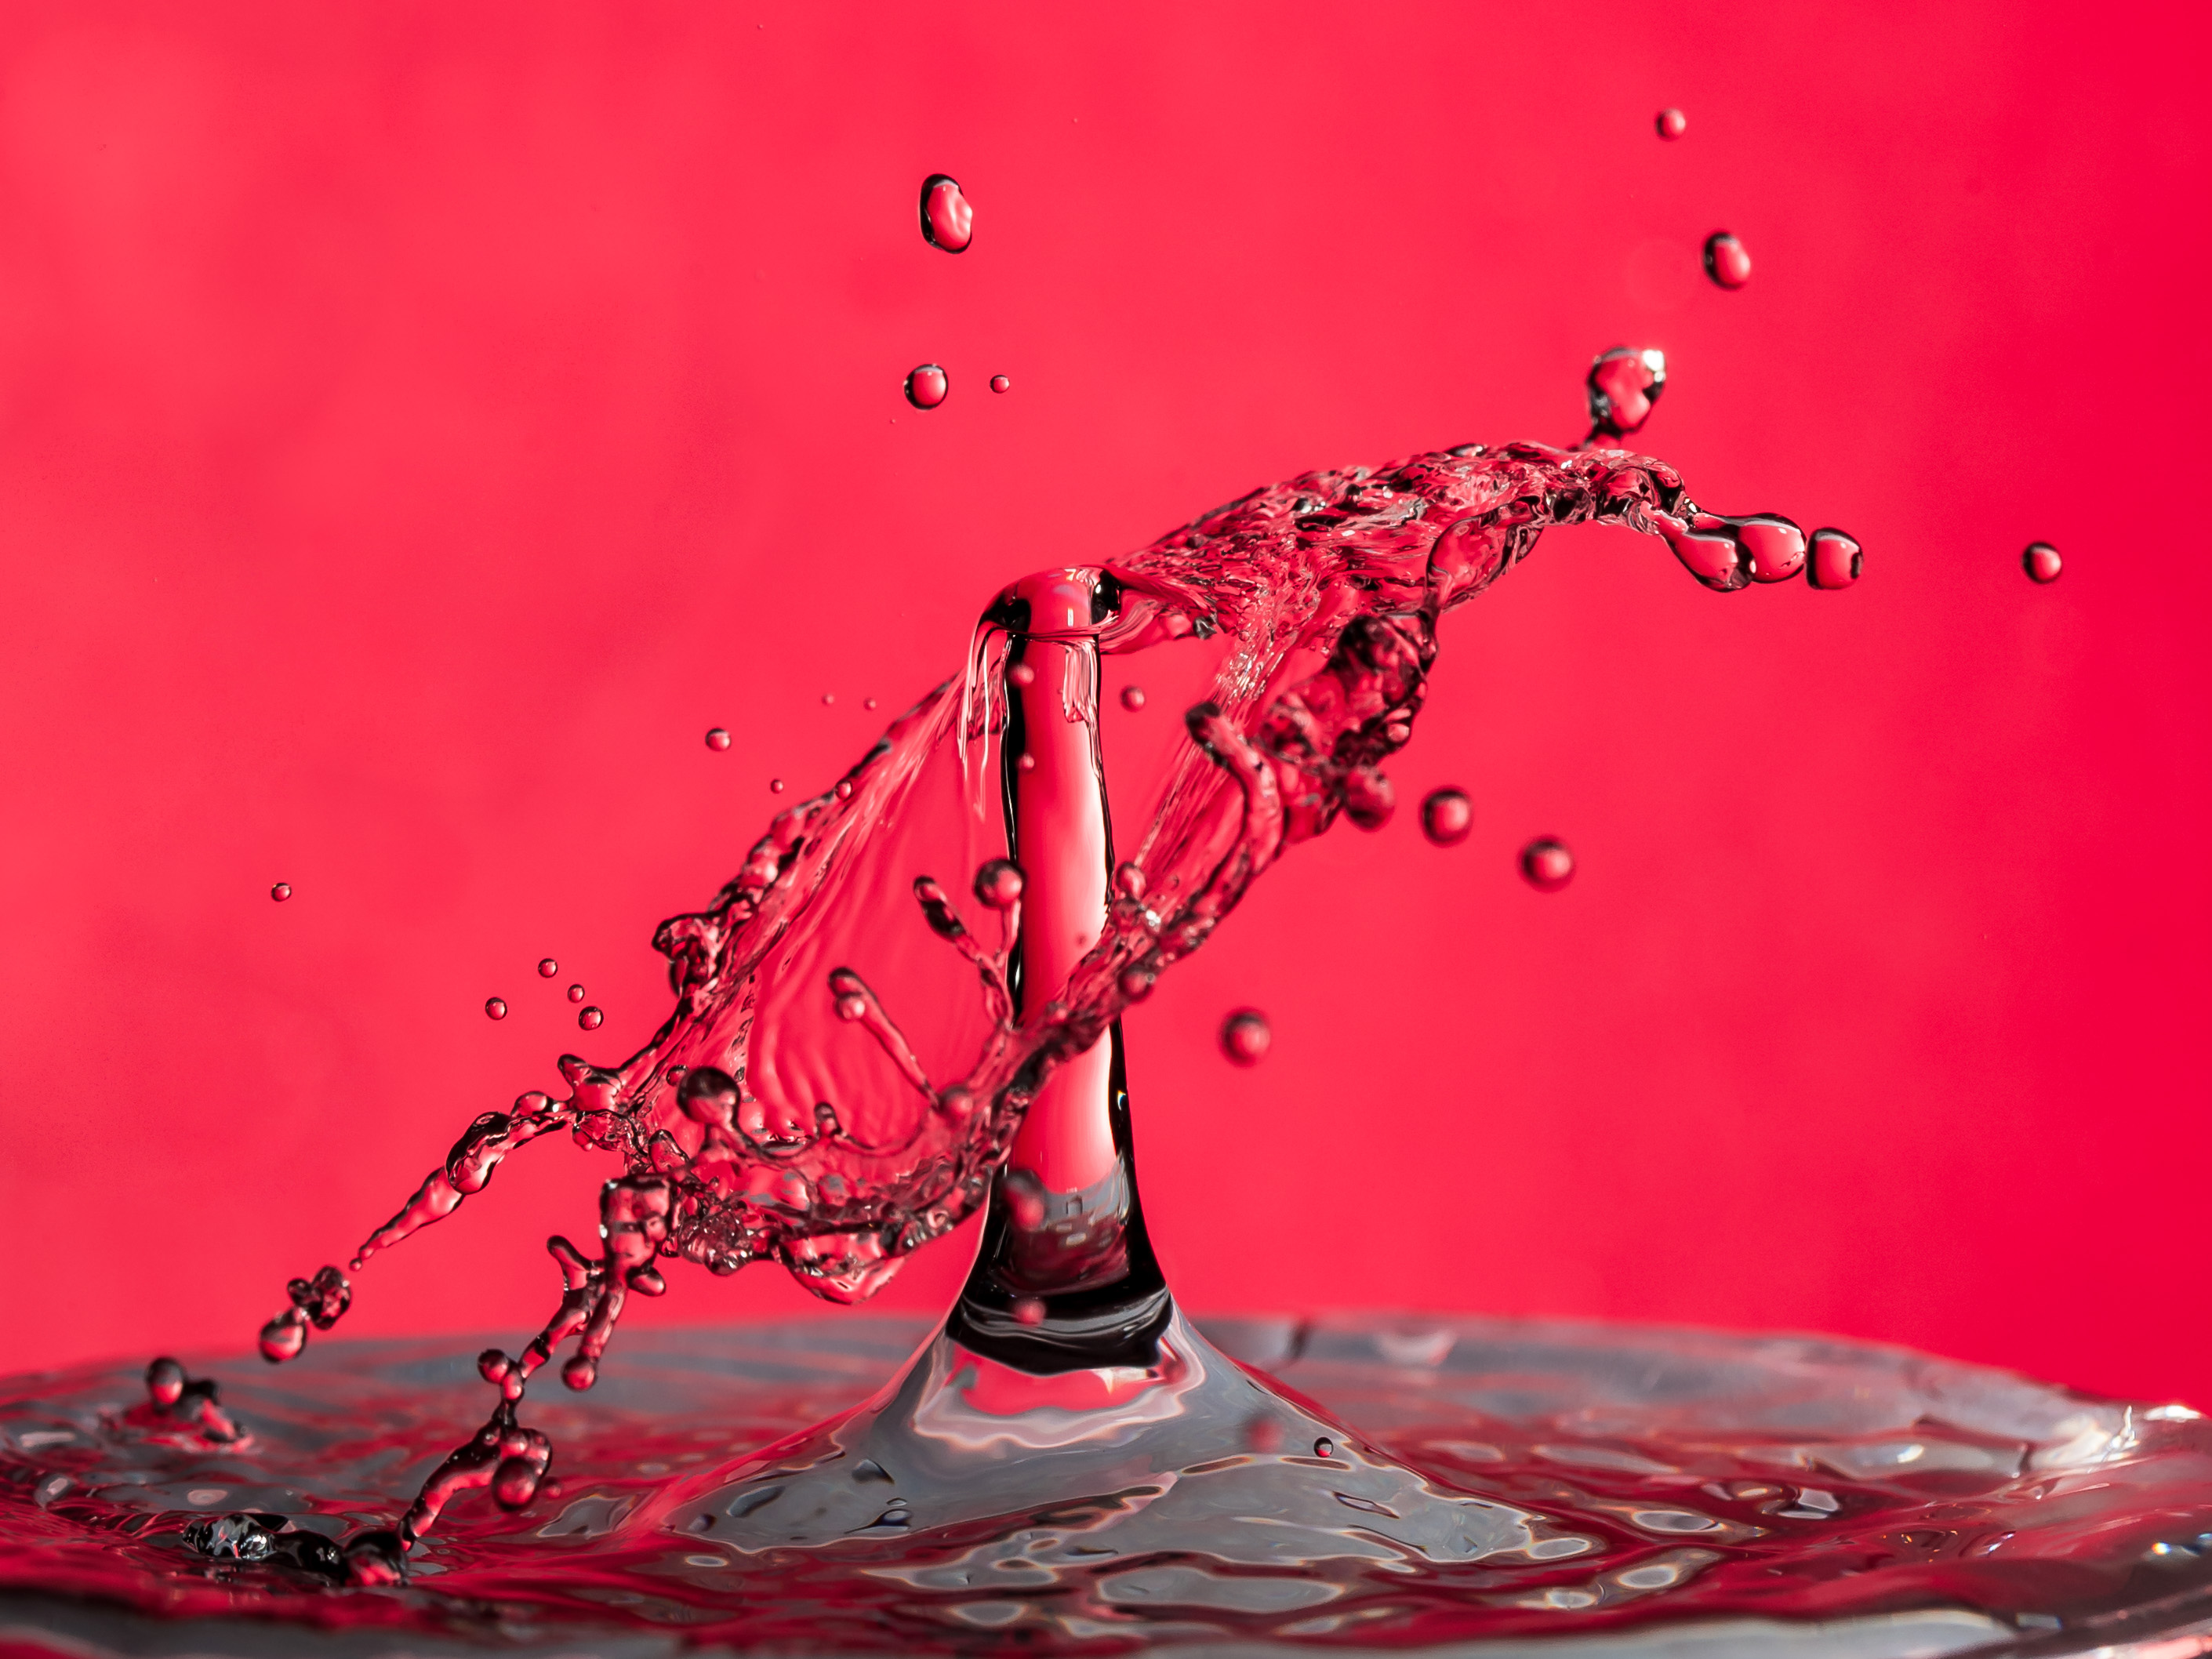 3rd Splash on Red by Tony McCann